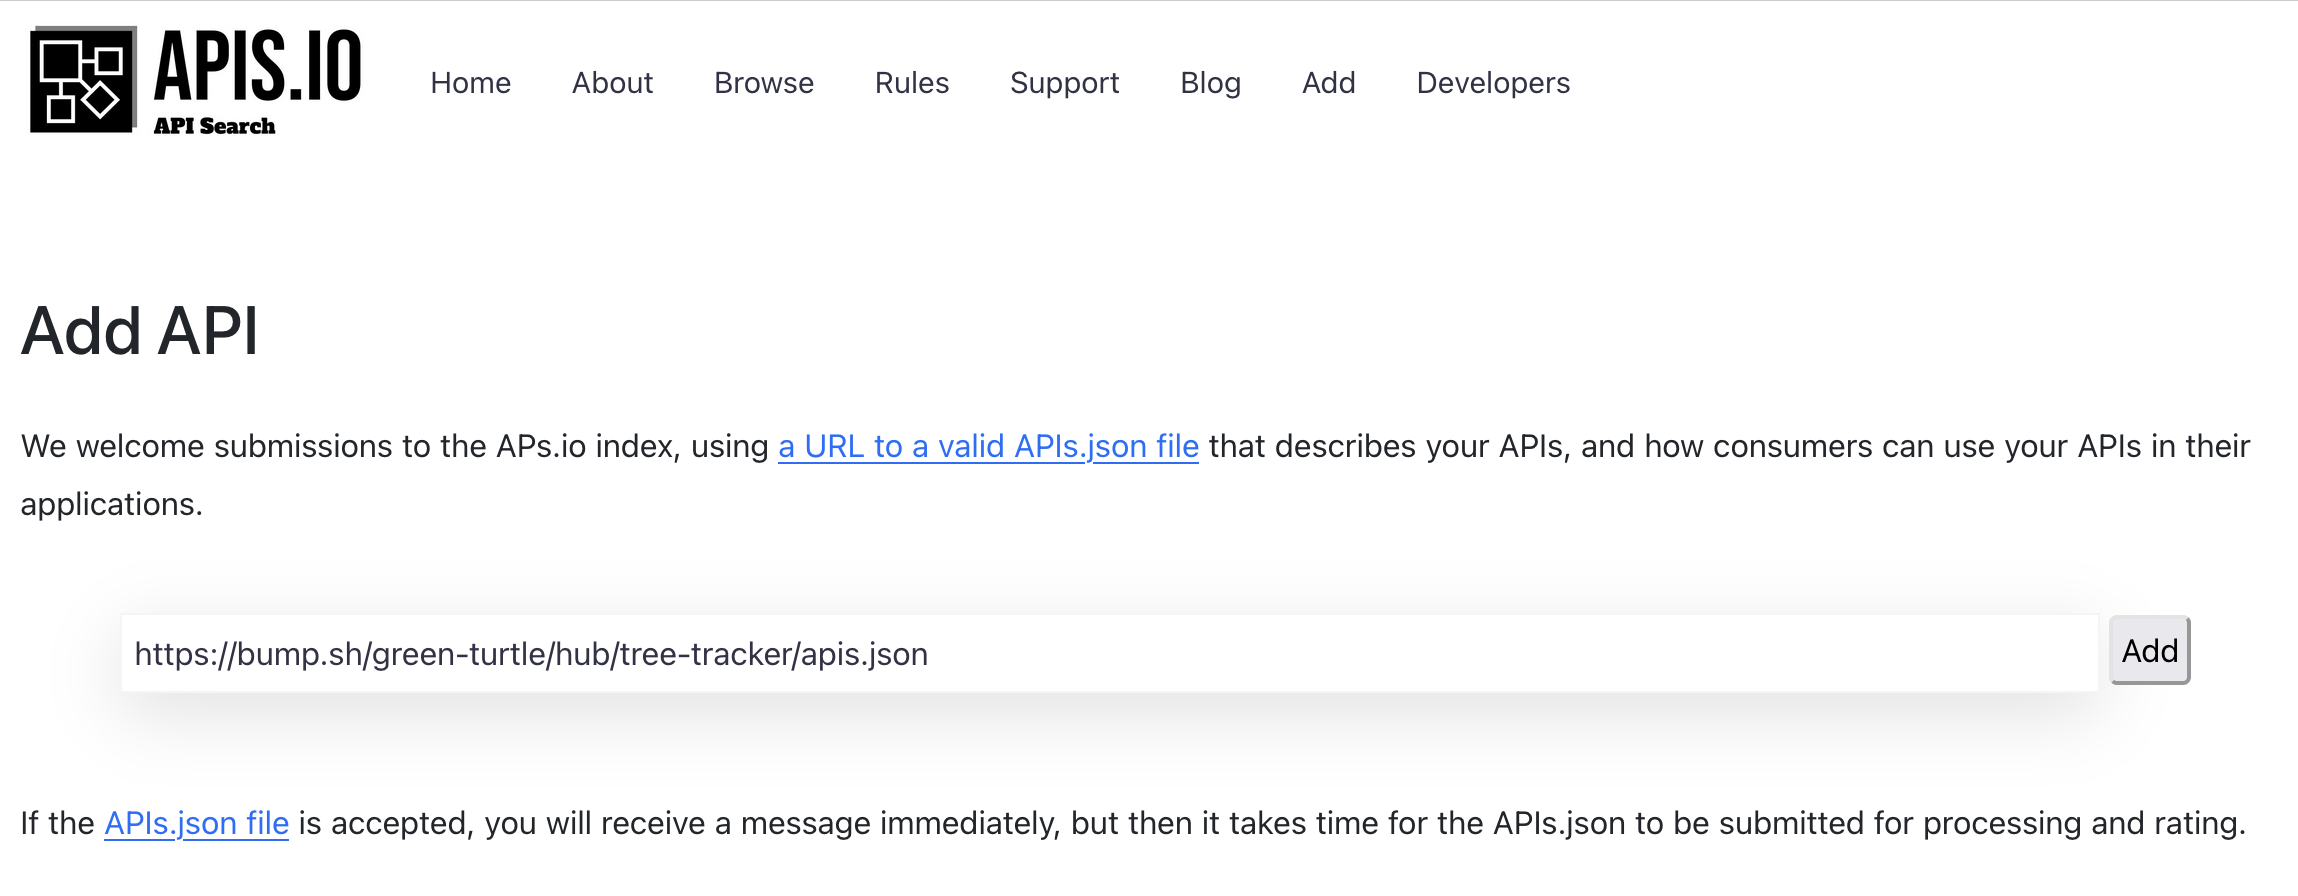 Screenshot of apis.io with an Add API with a URL form input